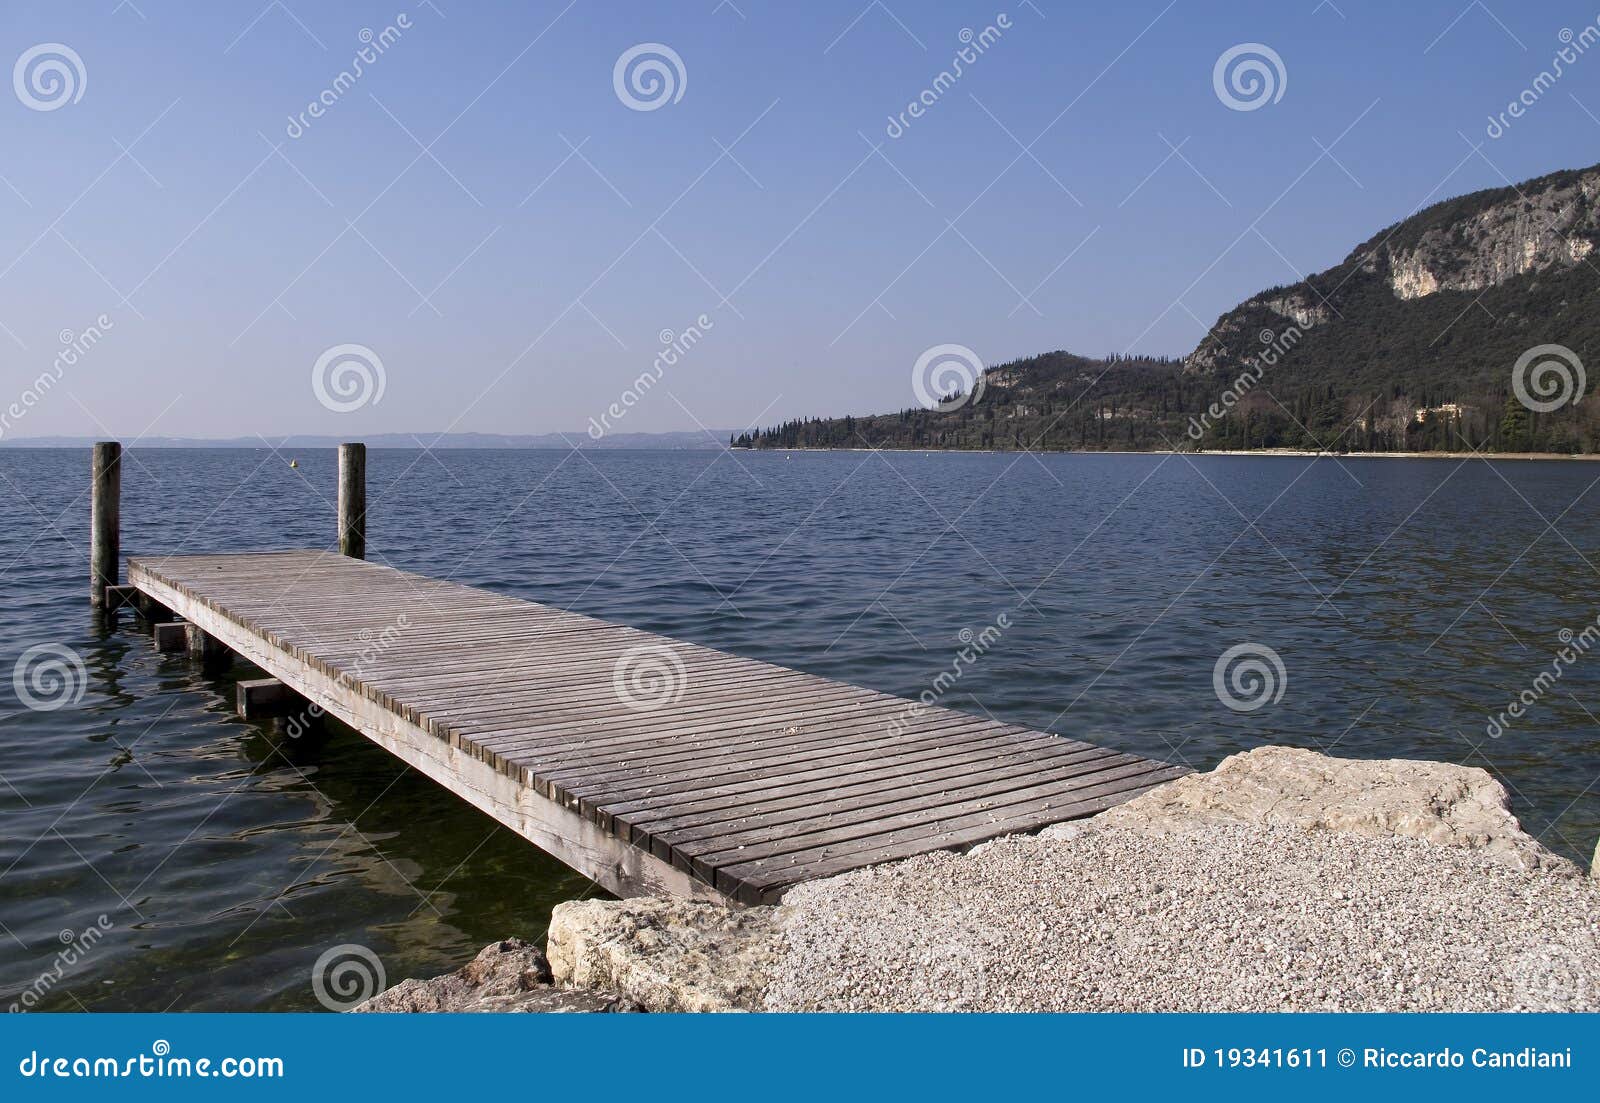 Floating dock near Garda on the lake of Garda, Italy.